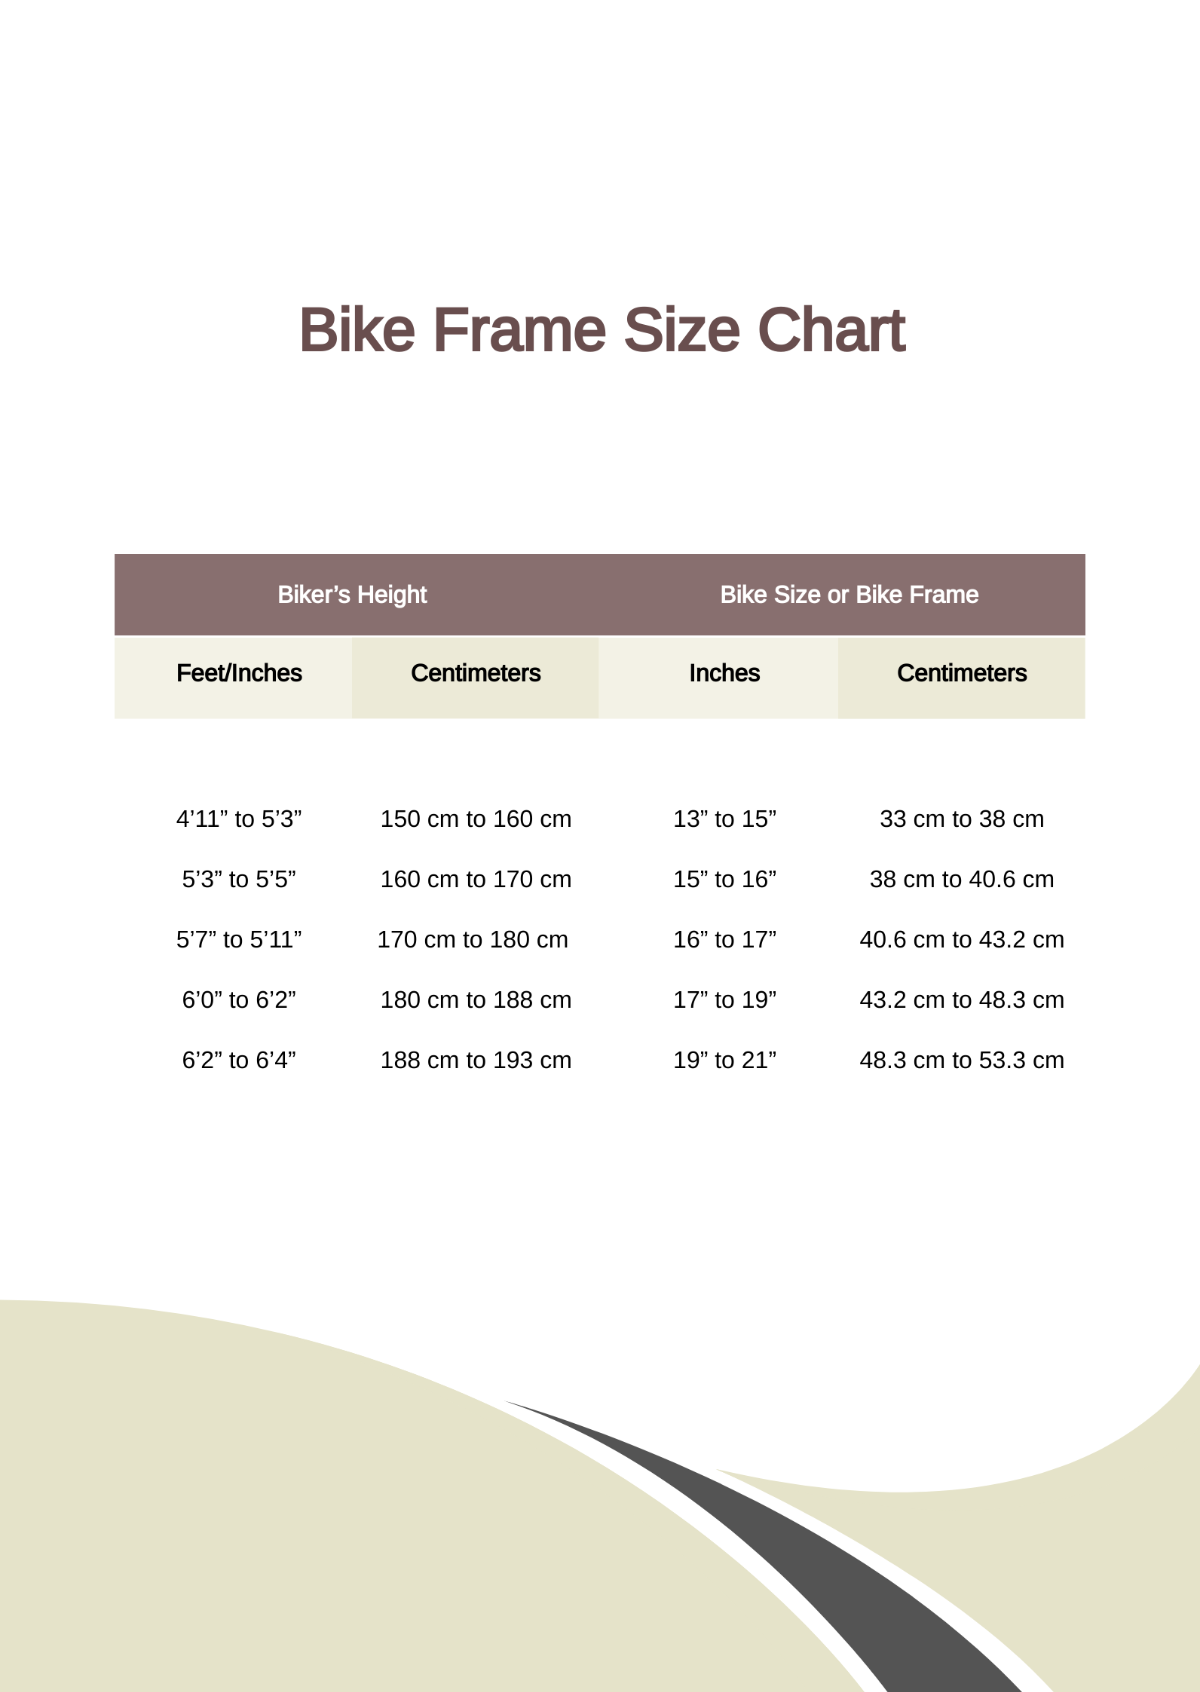 Bike Frame Size Chart Template